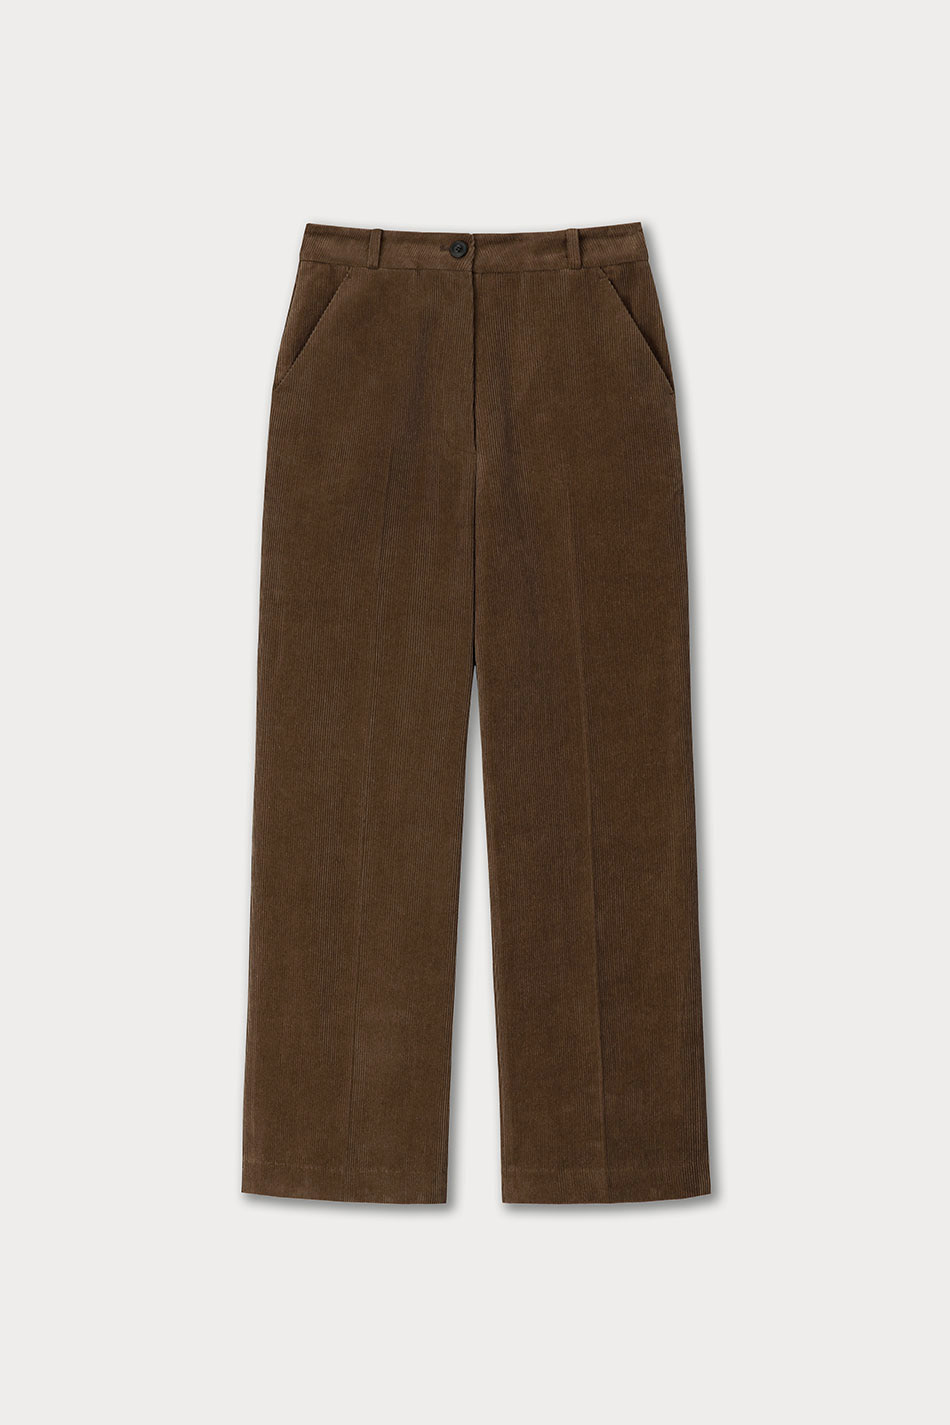 4th / Pintuck Corduroy Pants (Brown)(40% off)